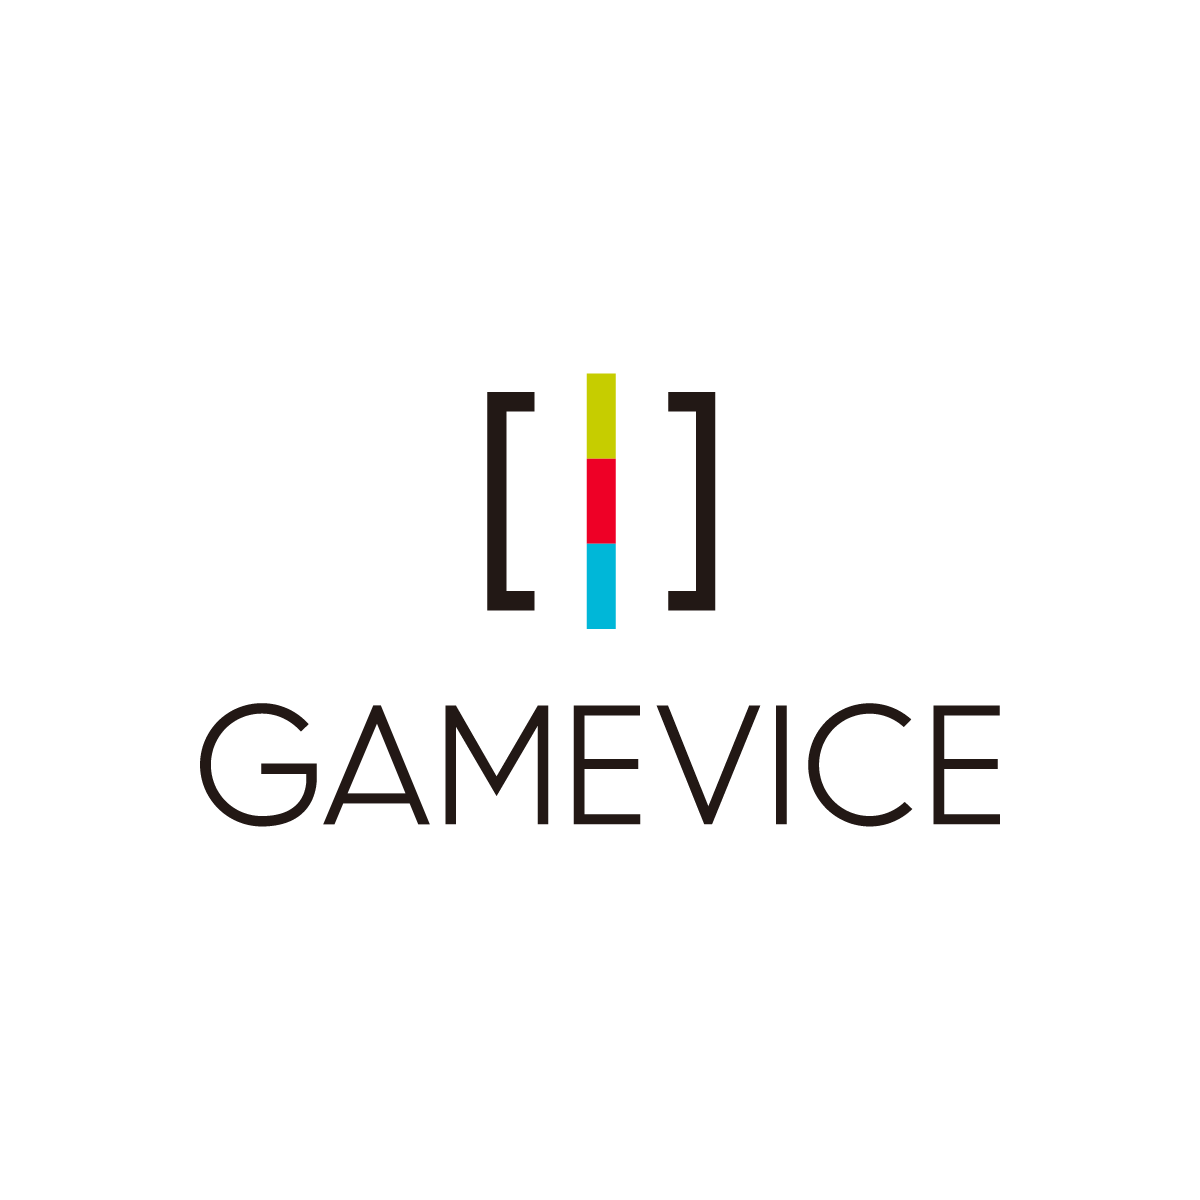 Gamevice ゲームヴァイス 海外輸入ブランド商品 株式会社エム エス シー